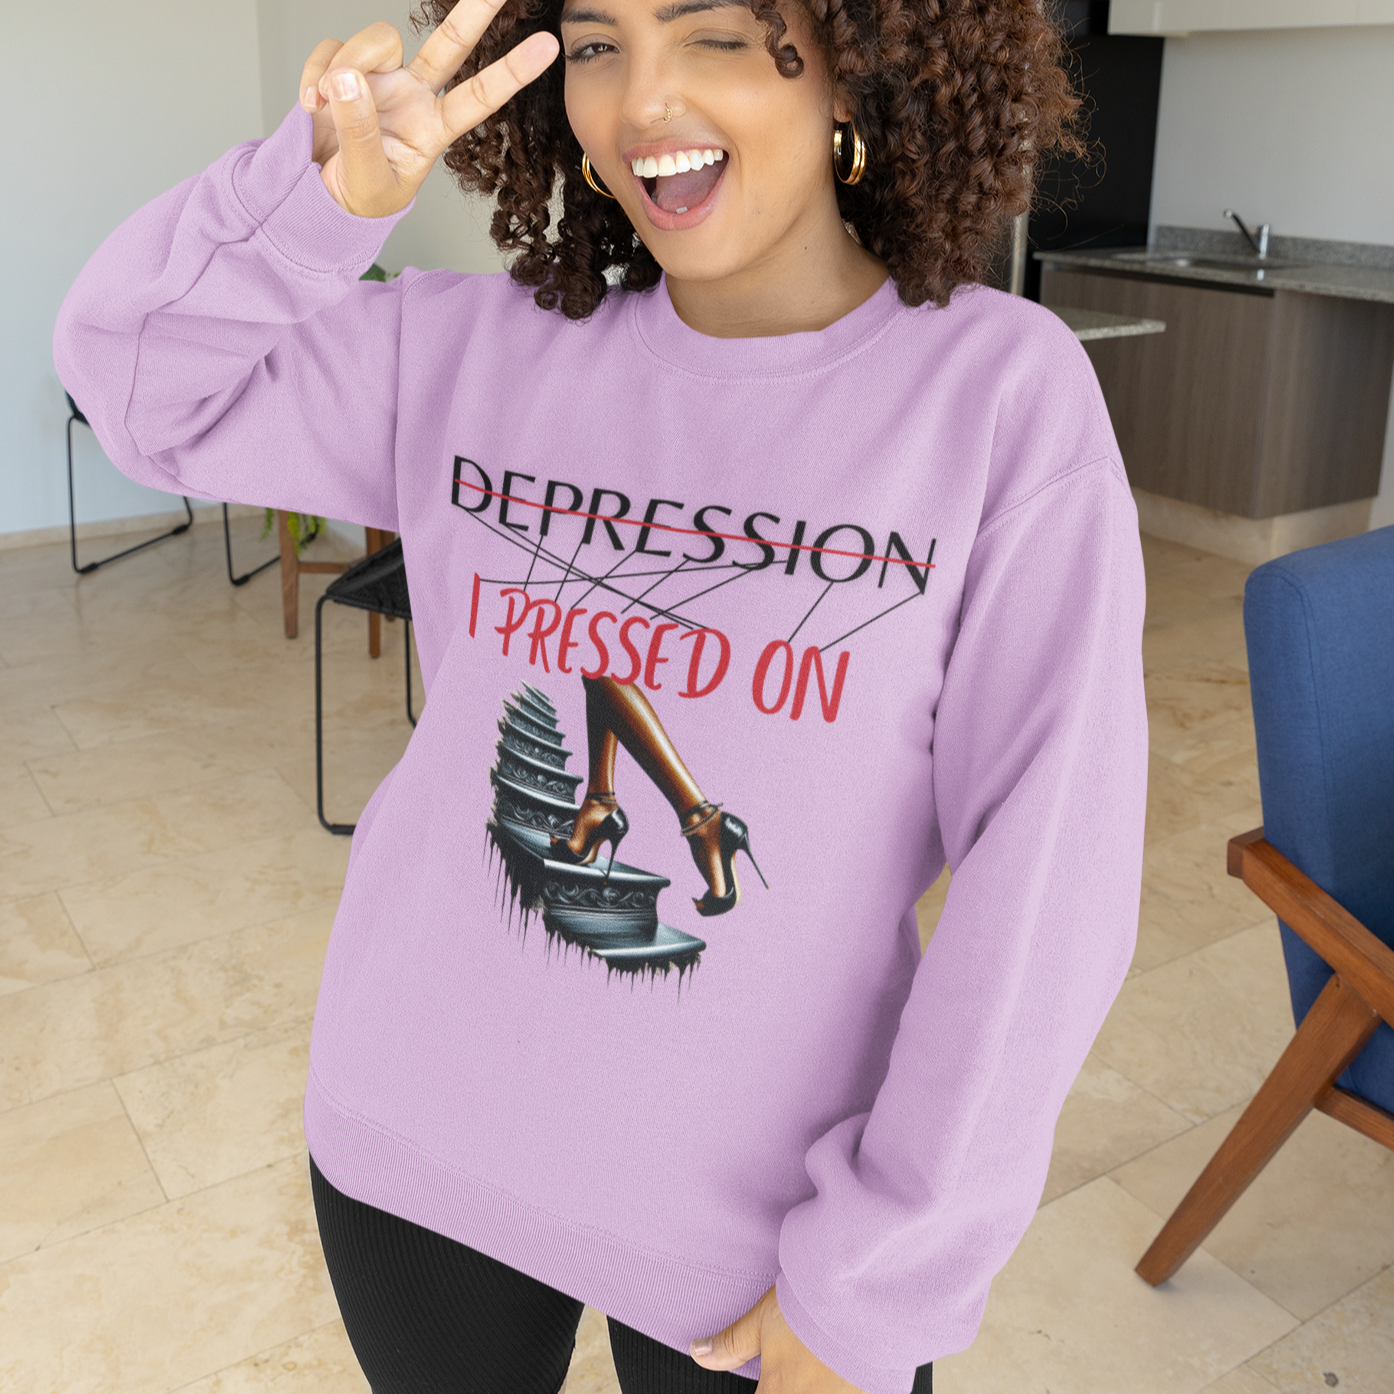 'I Pressed On' Women's Graphic Sweatshirt / Graphic Sweater / Graphic Sweatshirt